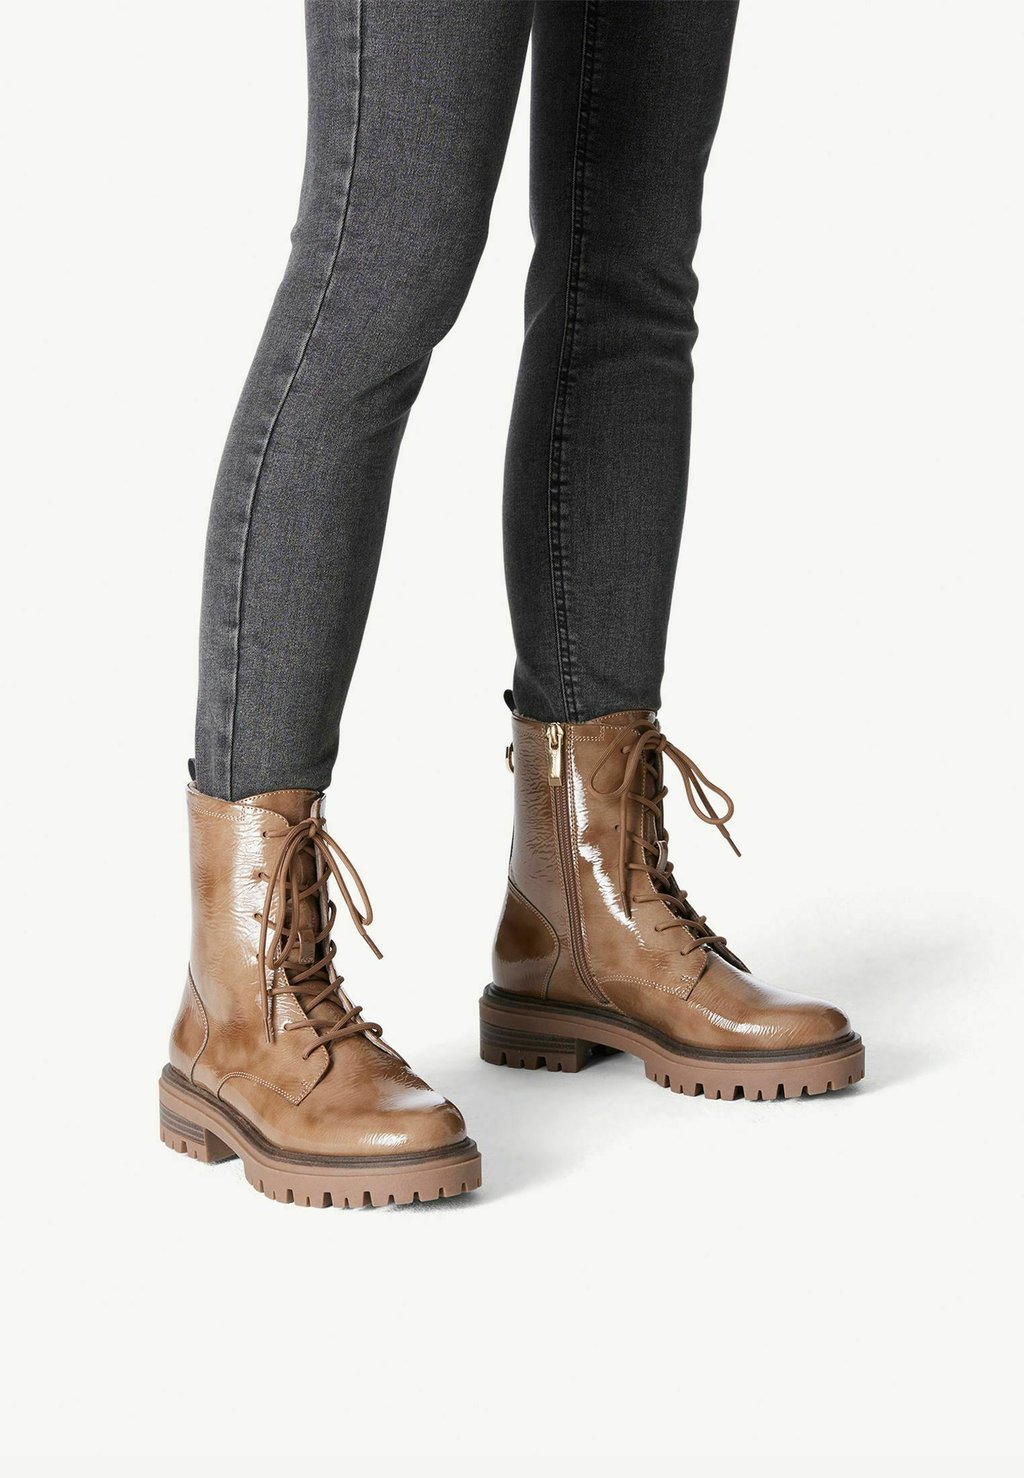 Ботинки на шнуровке Tamaris, коричневый ботинки на шнурках женские tamaris коричневый 40